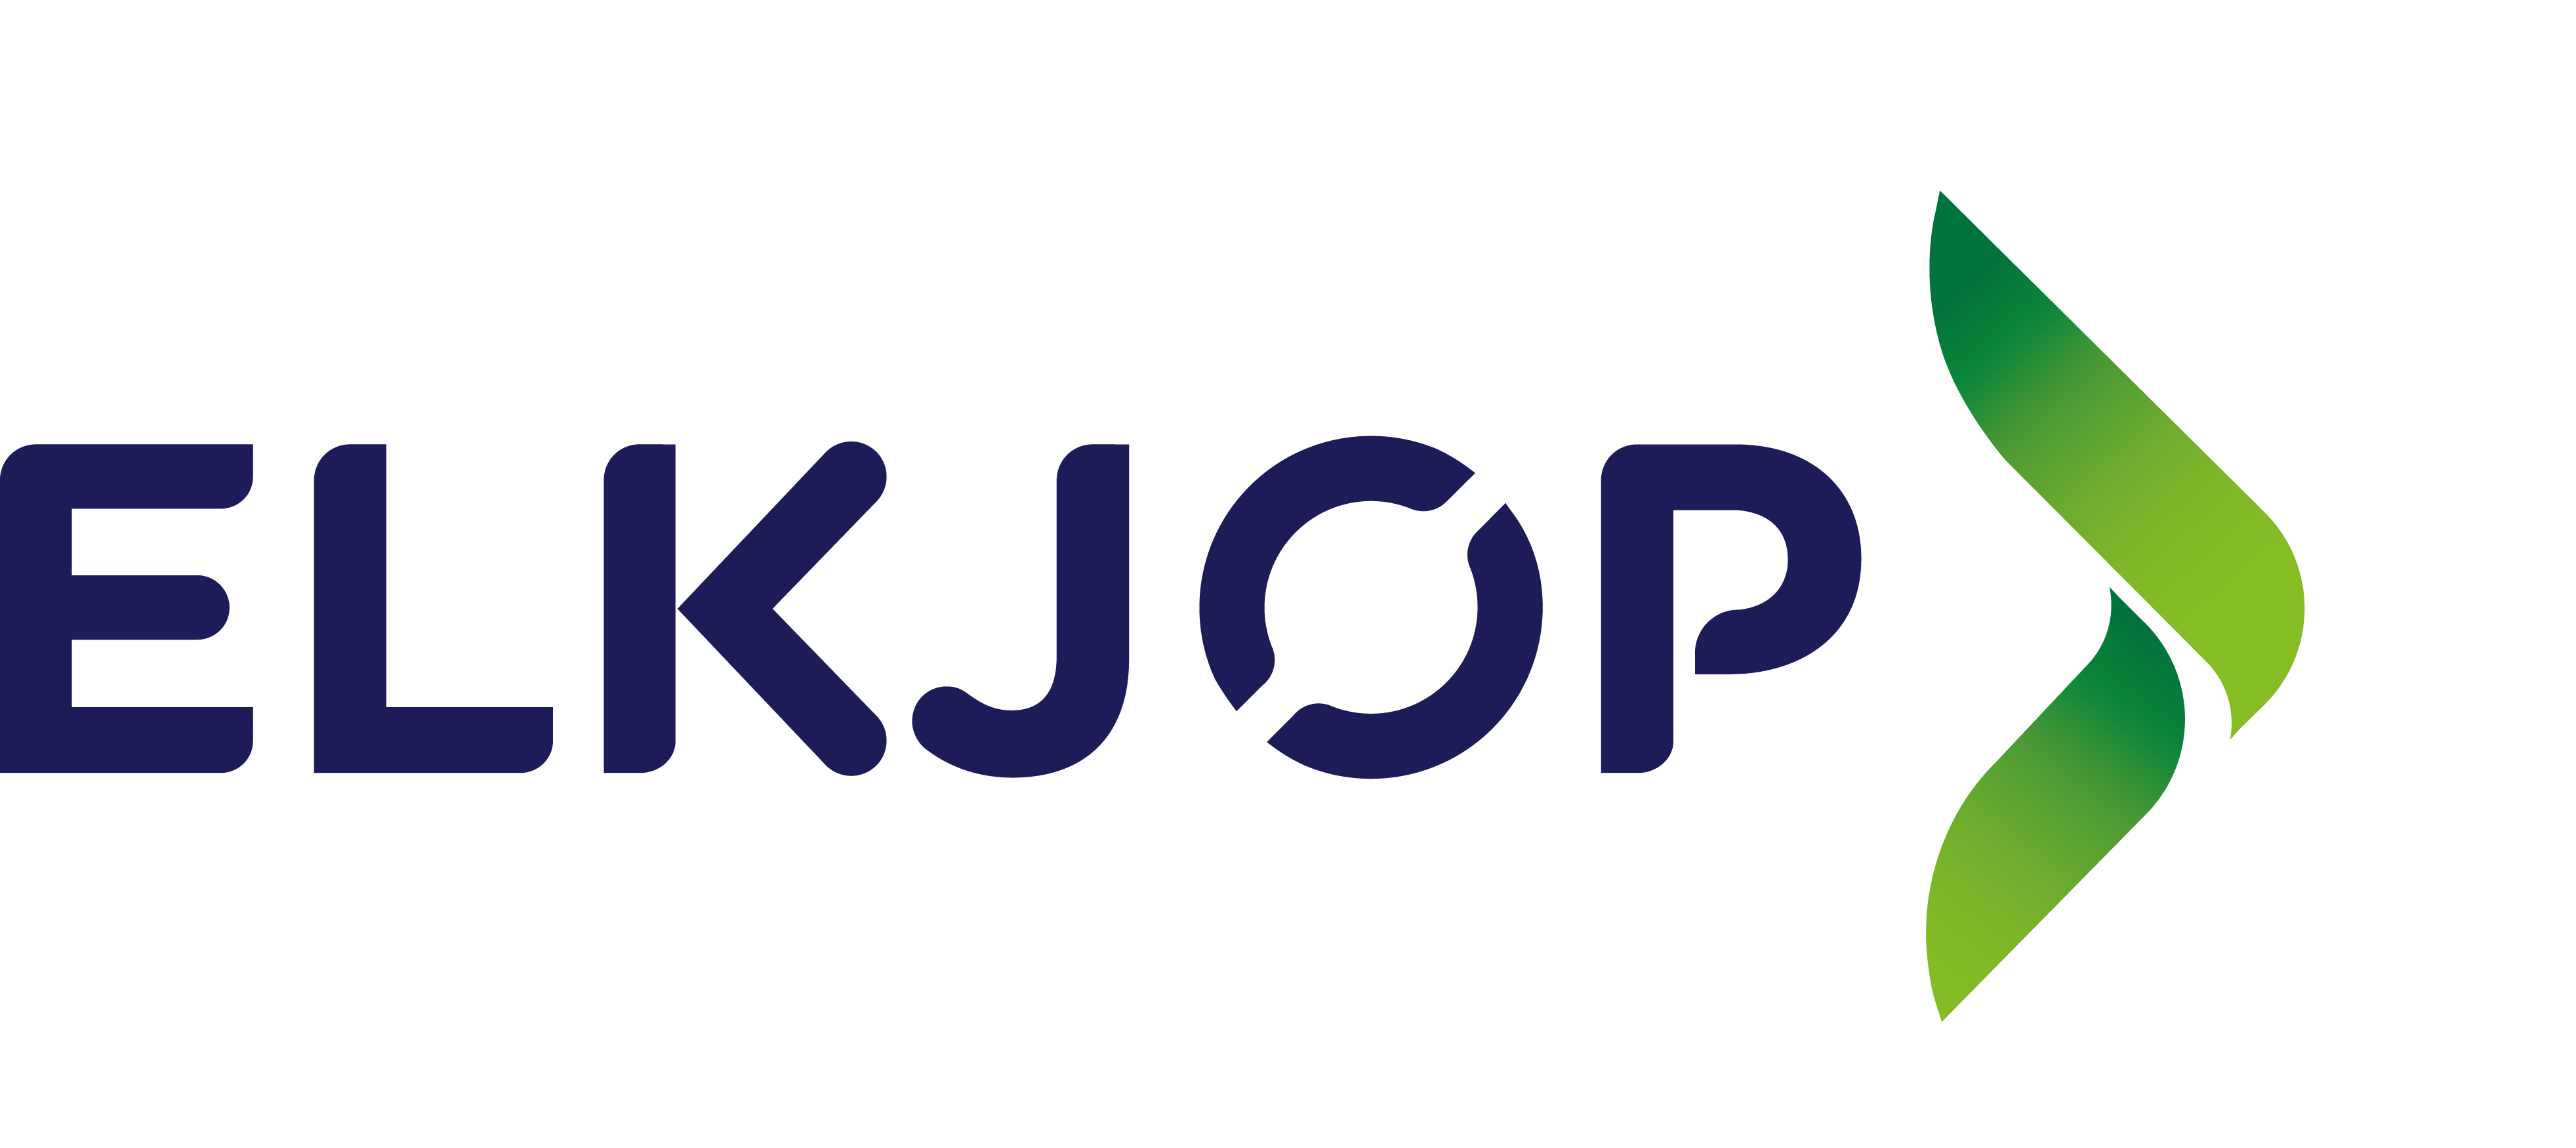 Elkjøp logo 